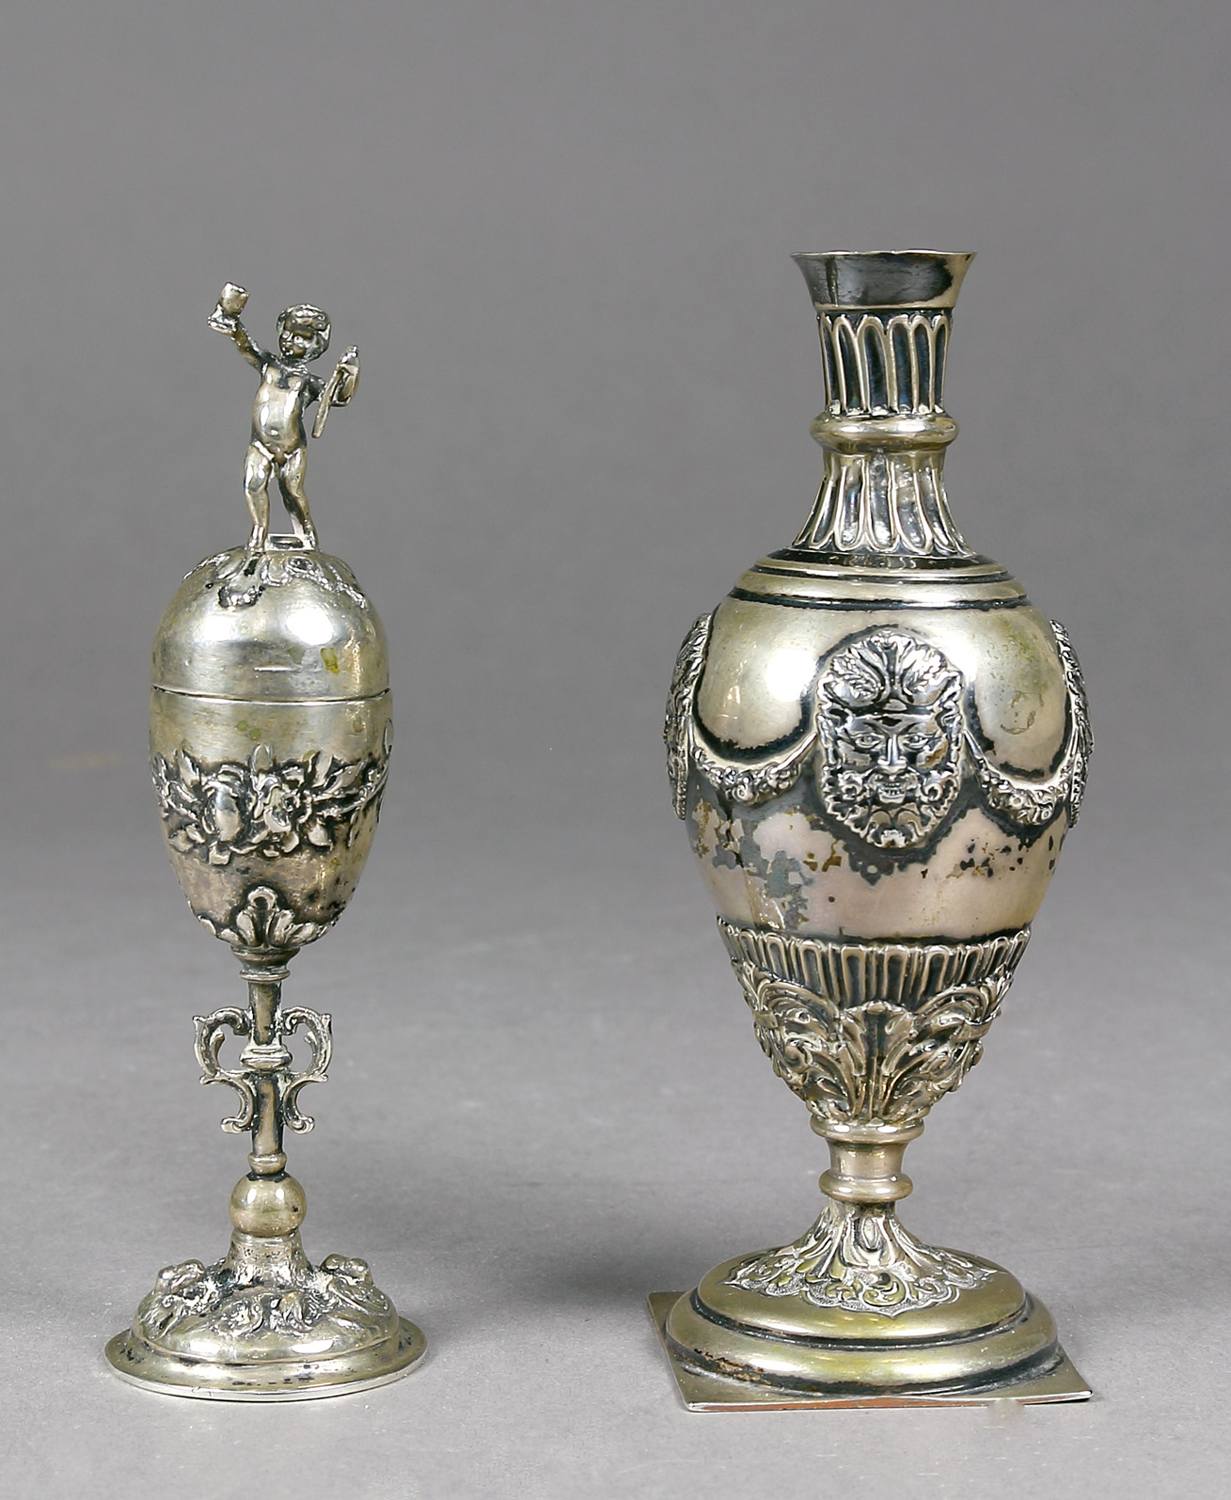 Auktionshaus Quentin Berlin  Silber Miniatur-Pokal und Miniatur-Vase  Silber  19. Jh. oder Ã¤lter